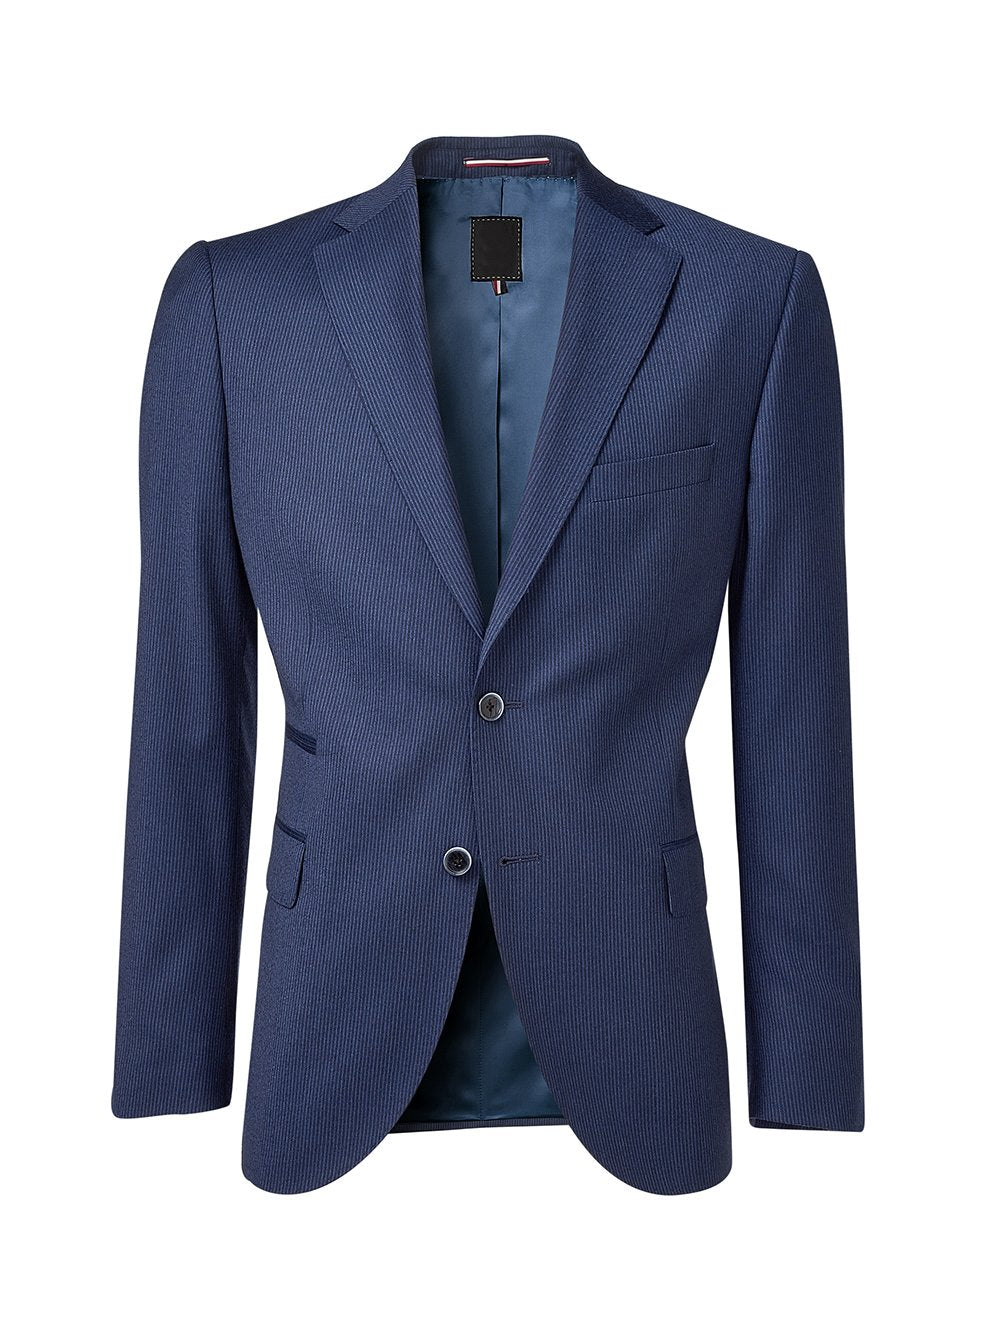 Classic Fit Two Buttons Men′s Business Suit